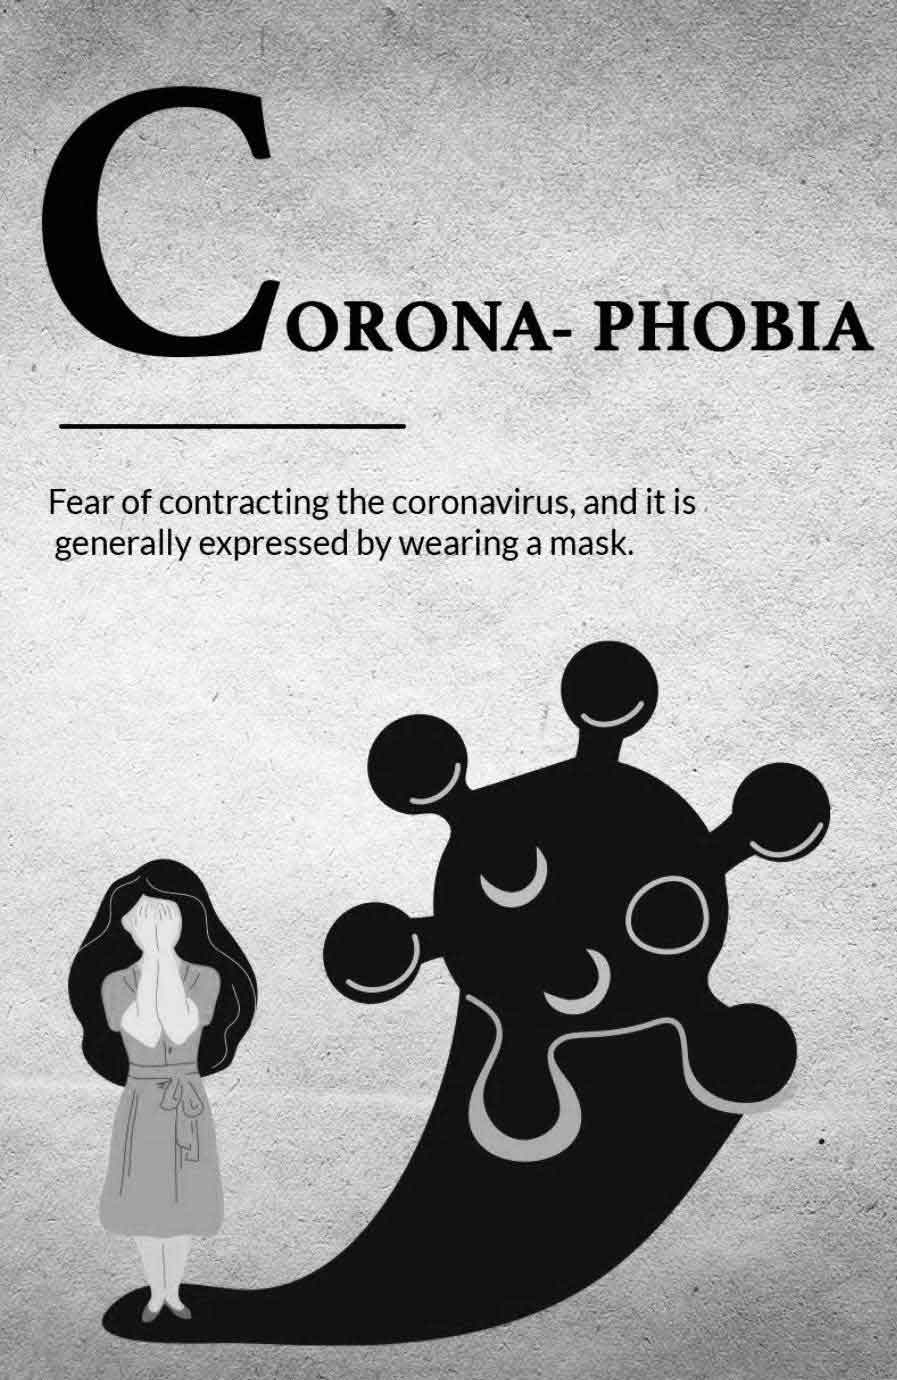 Corona phobia: Managing Stress, Fear, and Anxiety.